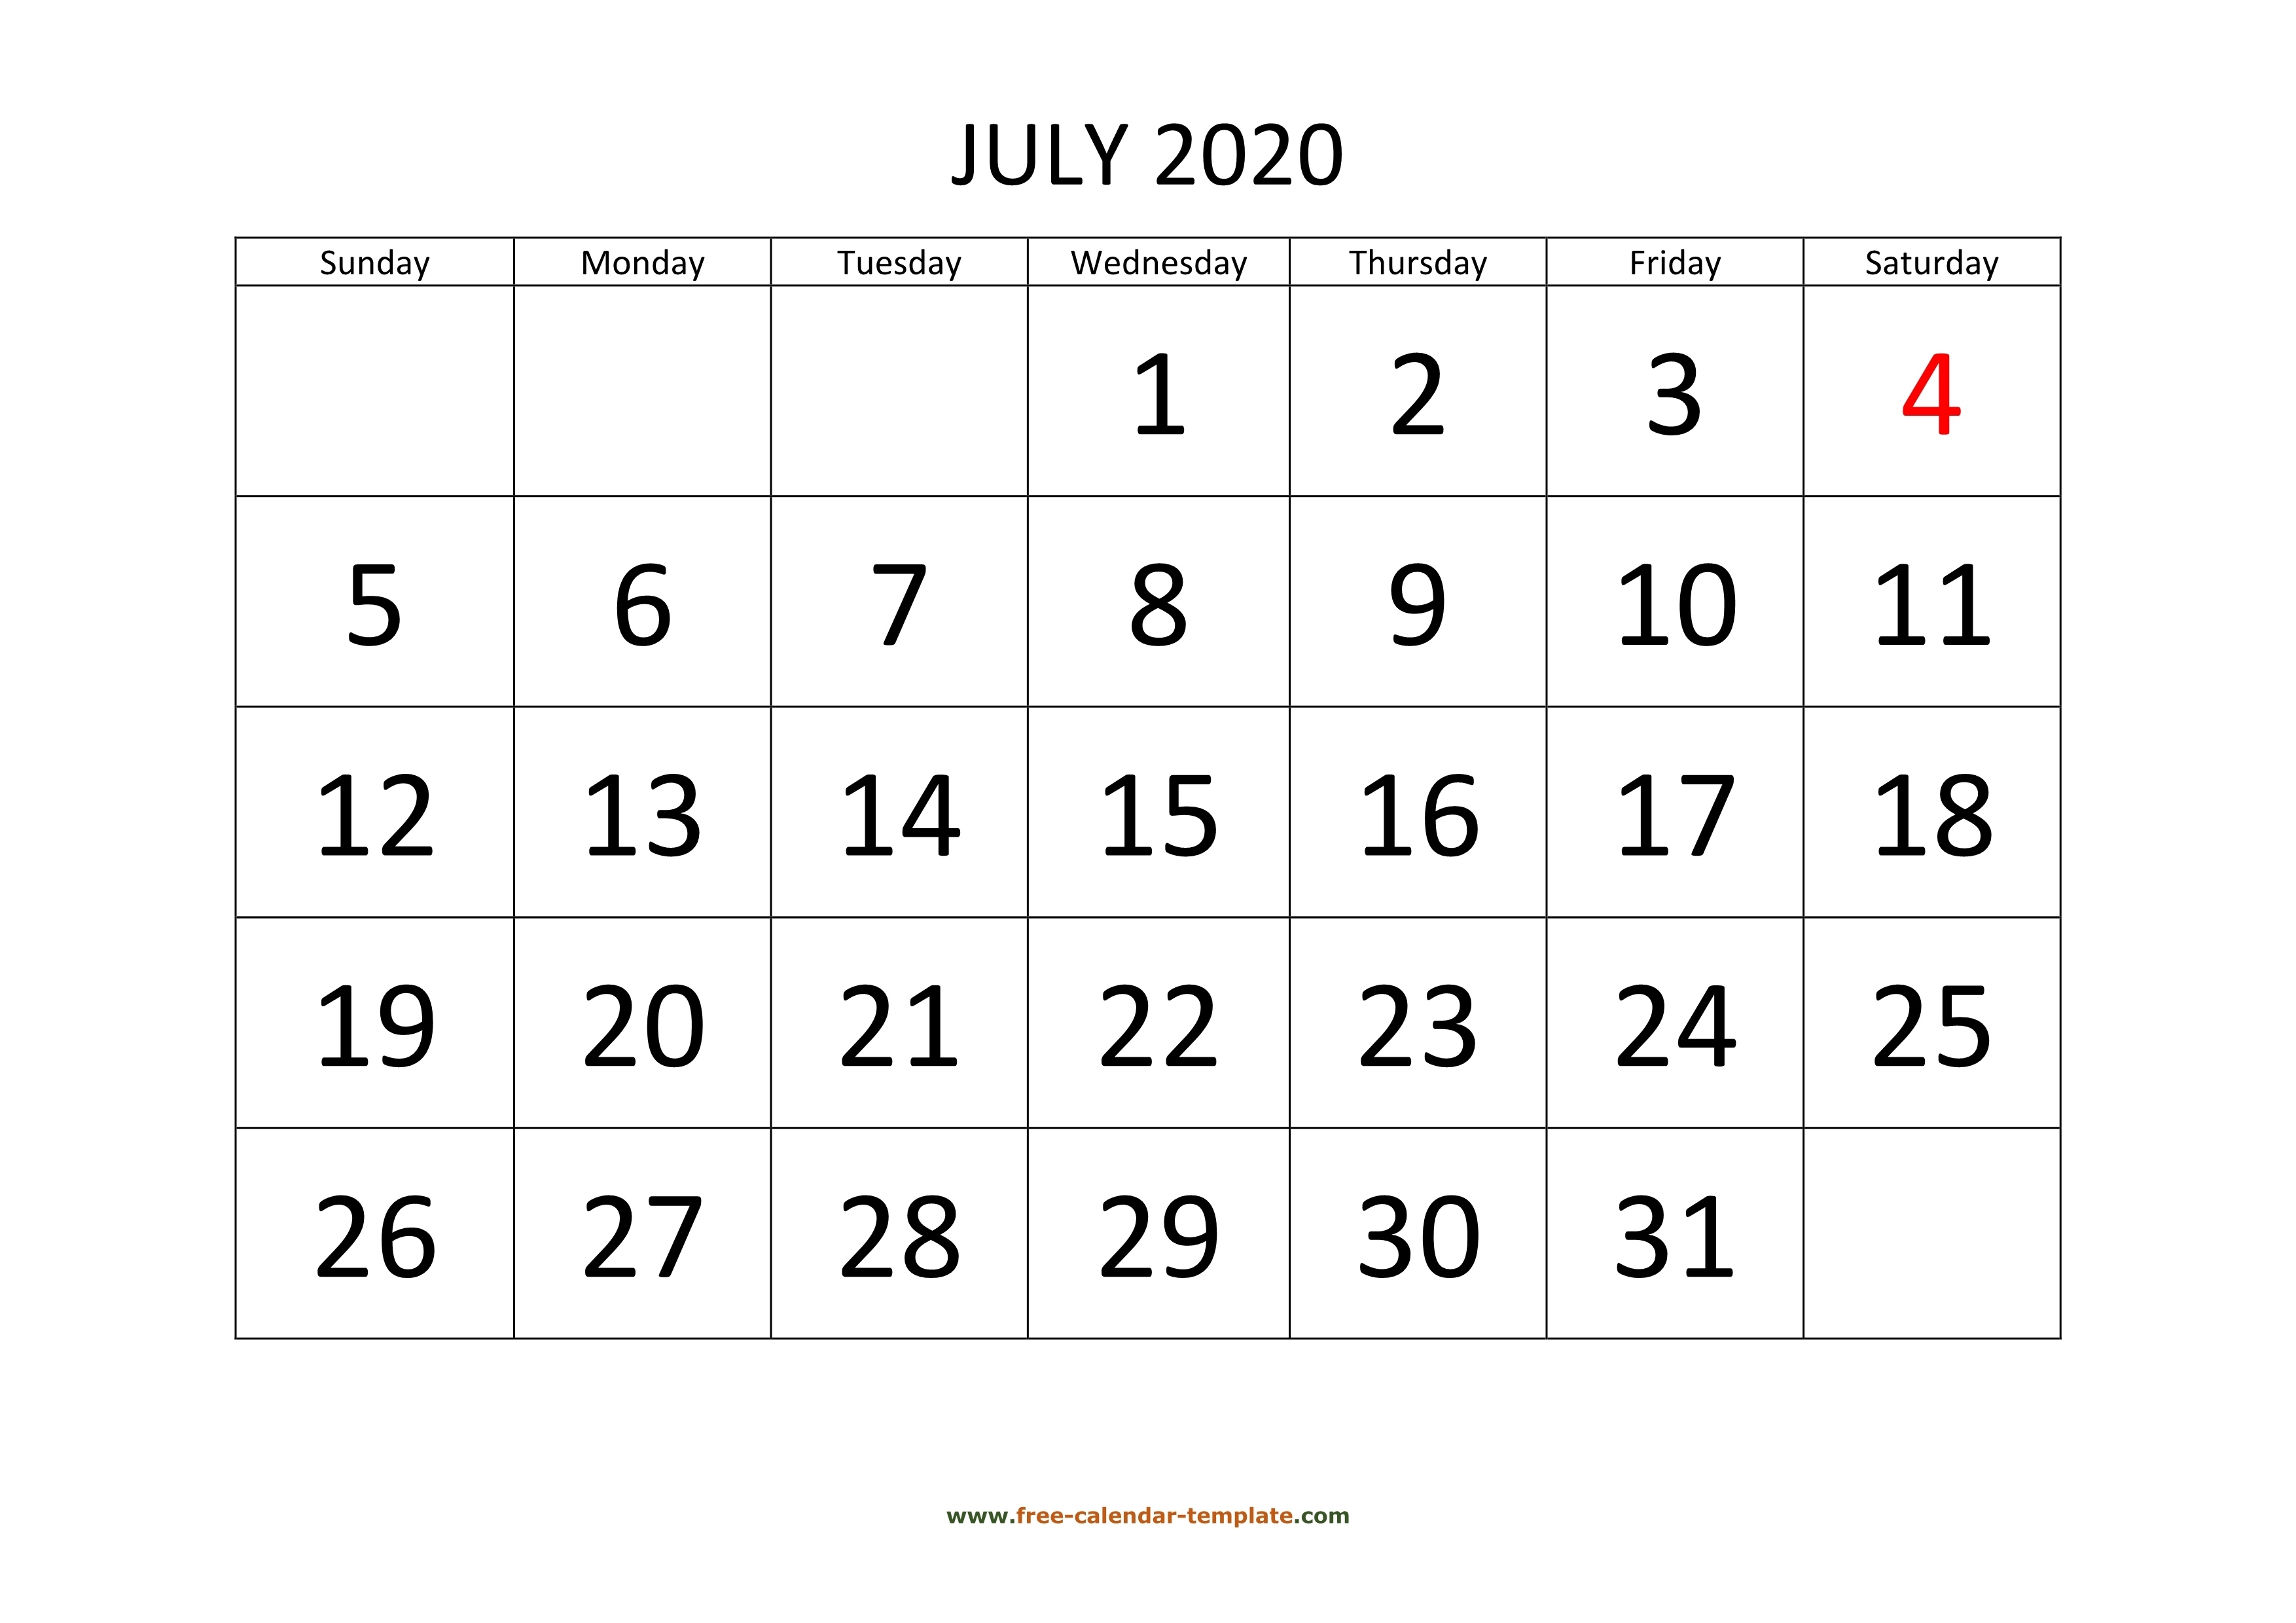 July 2020 Free Calendar Tempplate | Free-Calendar-Template One Page Calendar July 2020 To June 2021